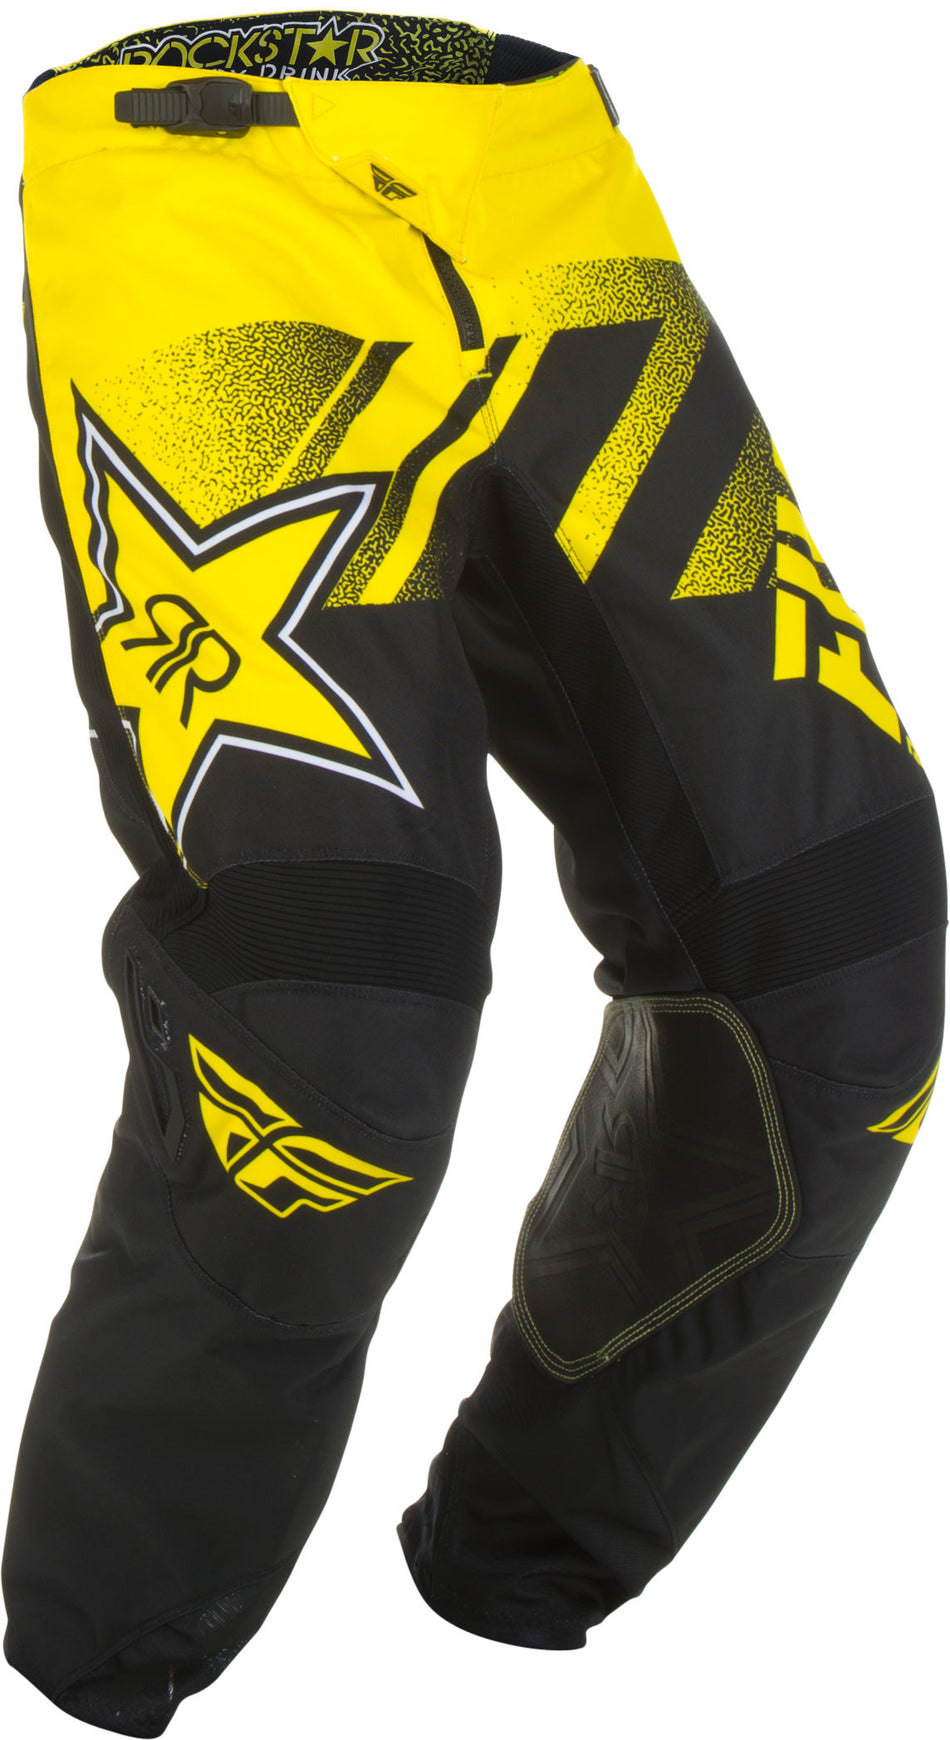 FLY RACING Kinetic Rockstar Pants Yellow/Black Sz 30 372-33330